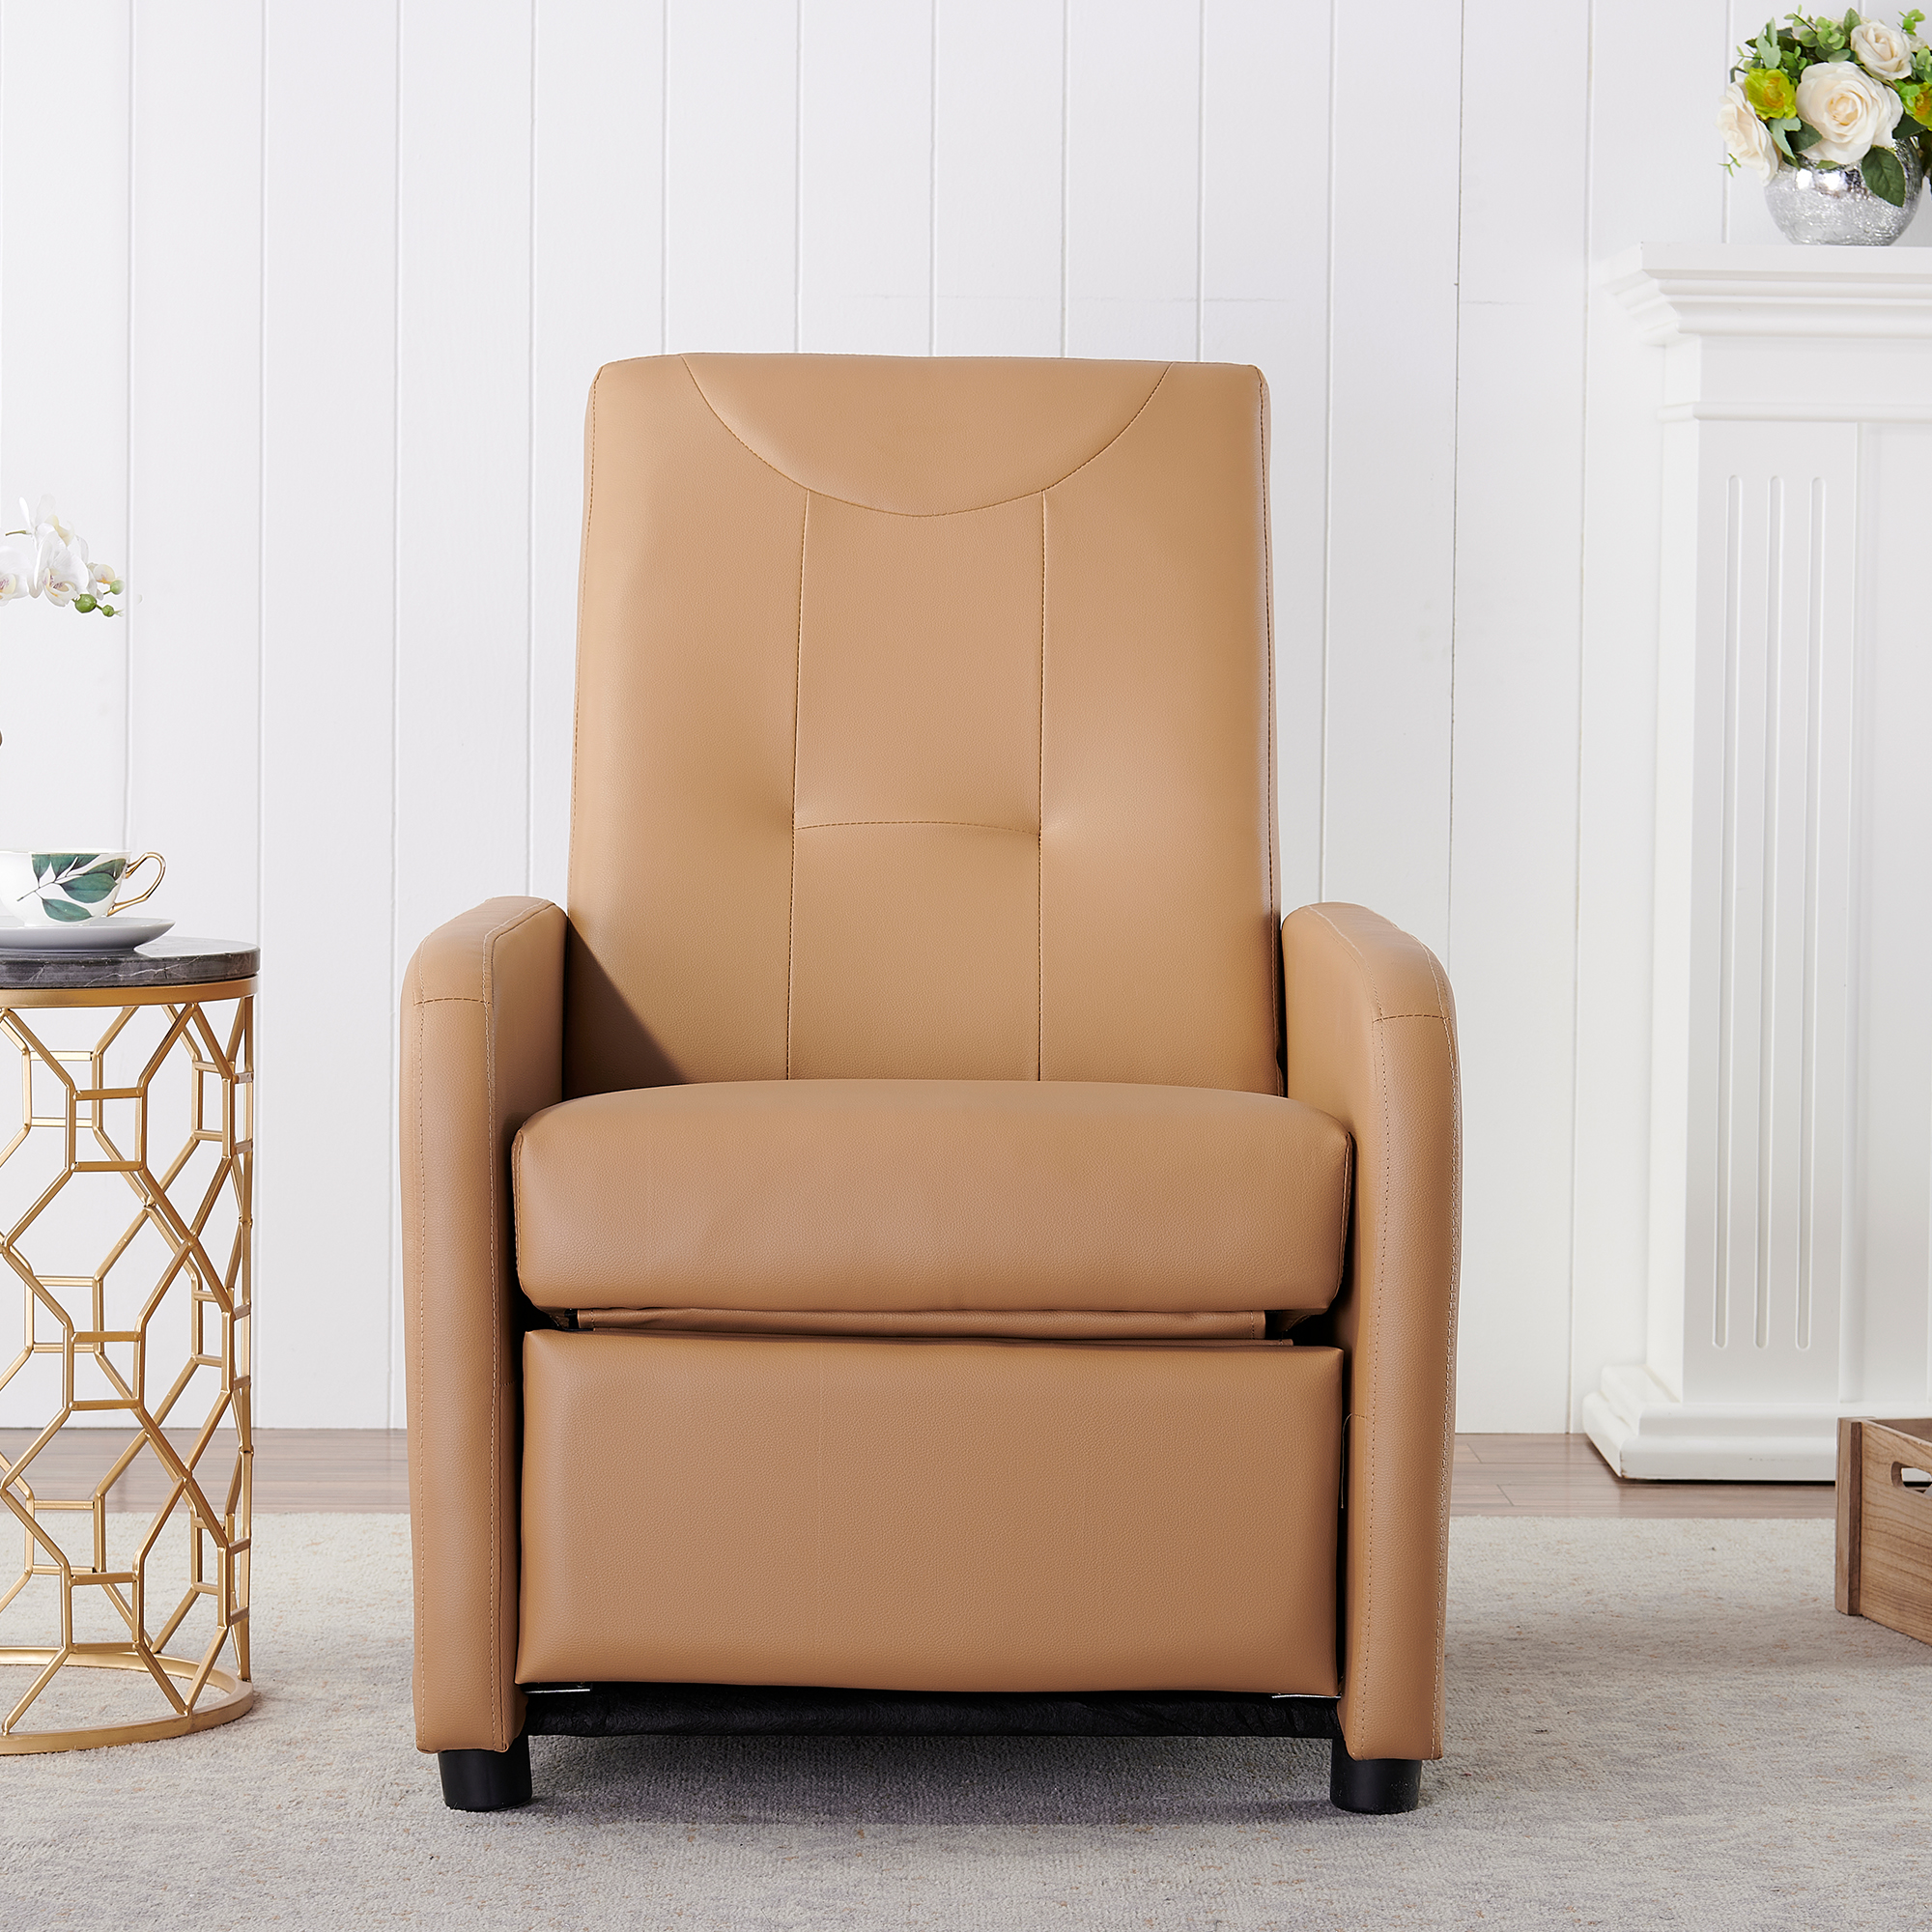 Multifunctional sofa chair and adjustable lounge chair-Boyel Living